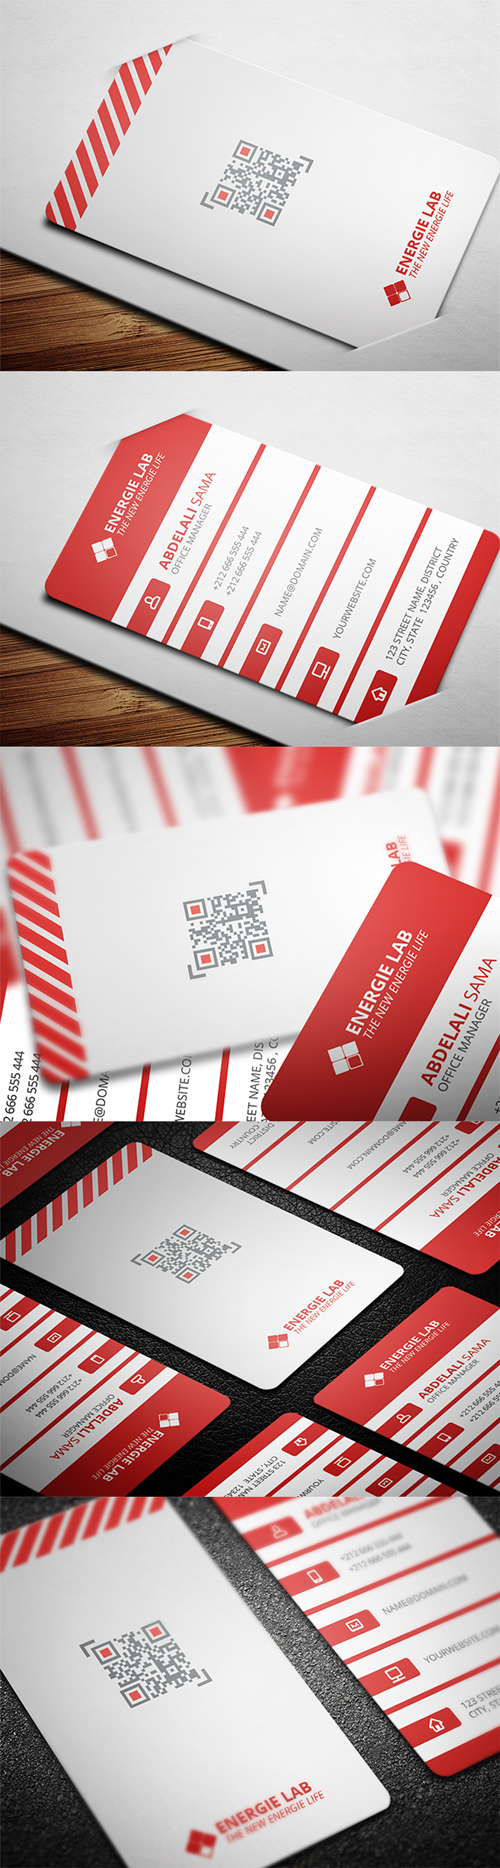 business cards template design - 6